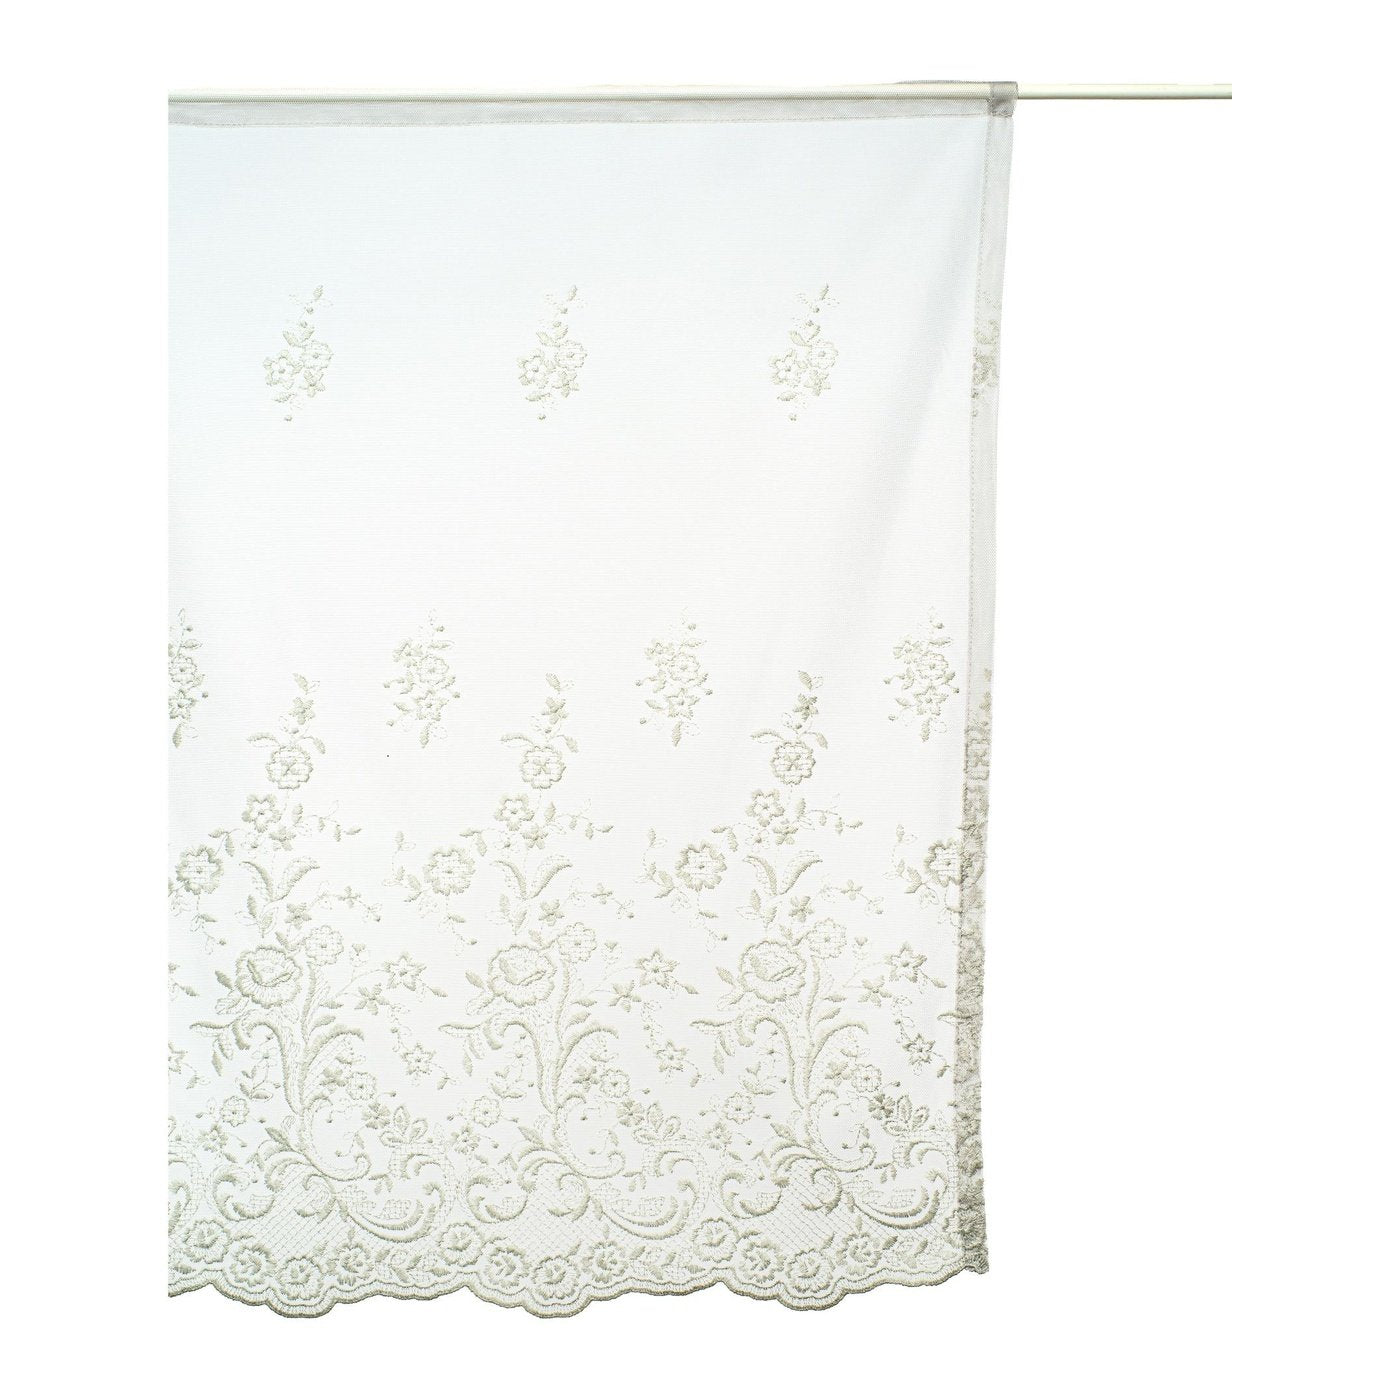 Sophisticated Charm: Lena Short Lace Curtain - 2 Colors, 2 Sizes